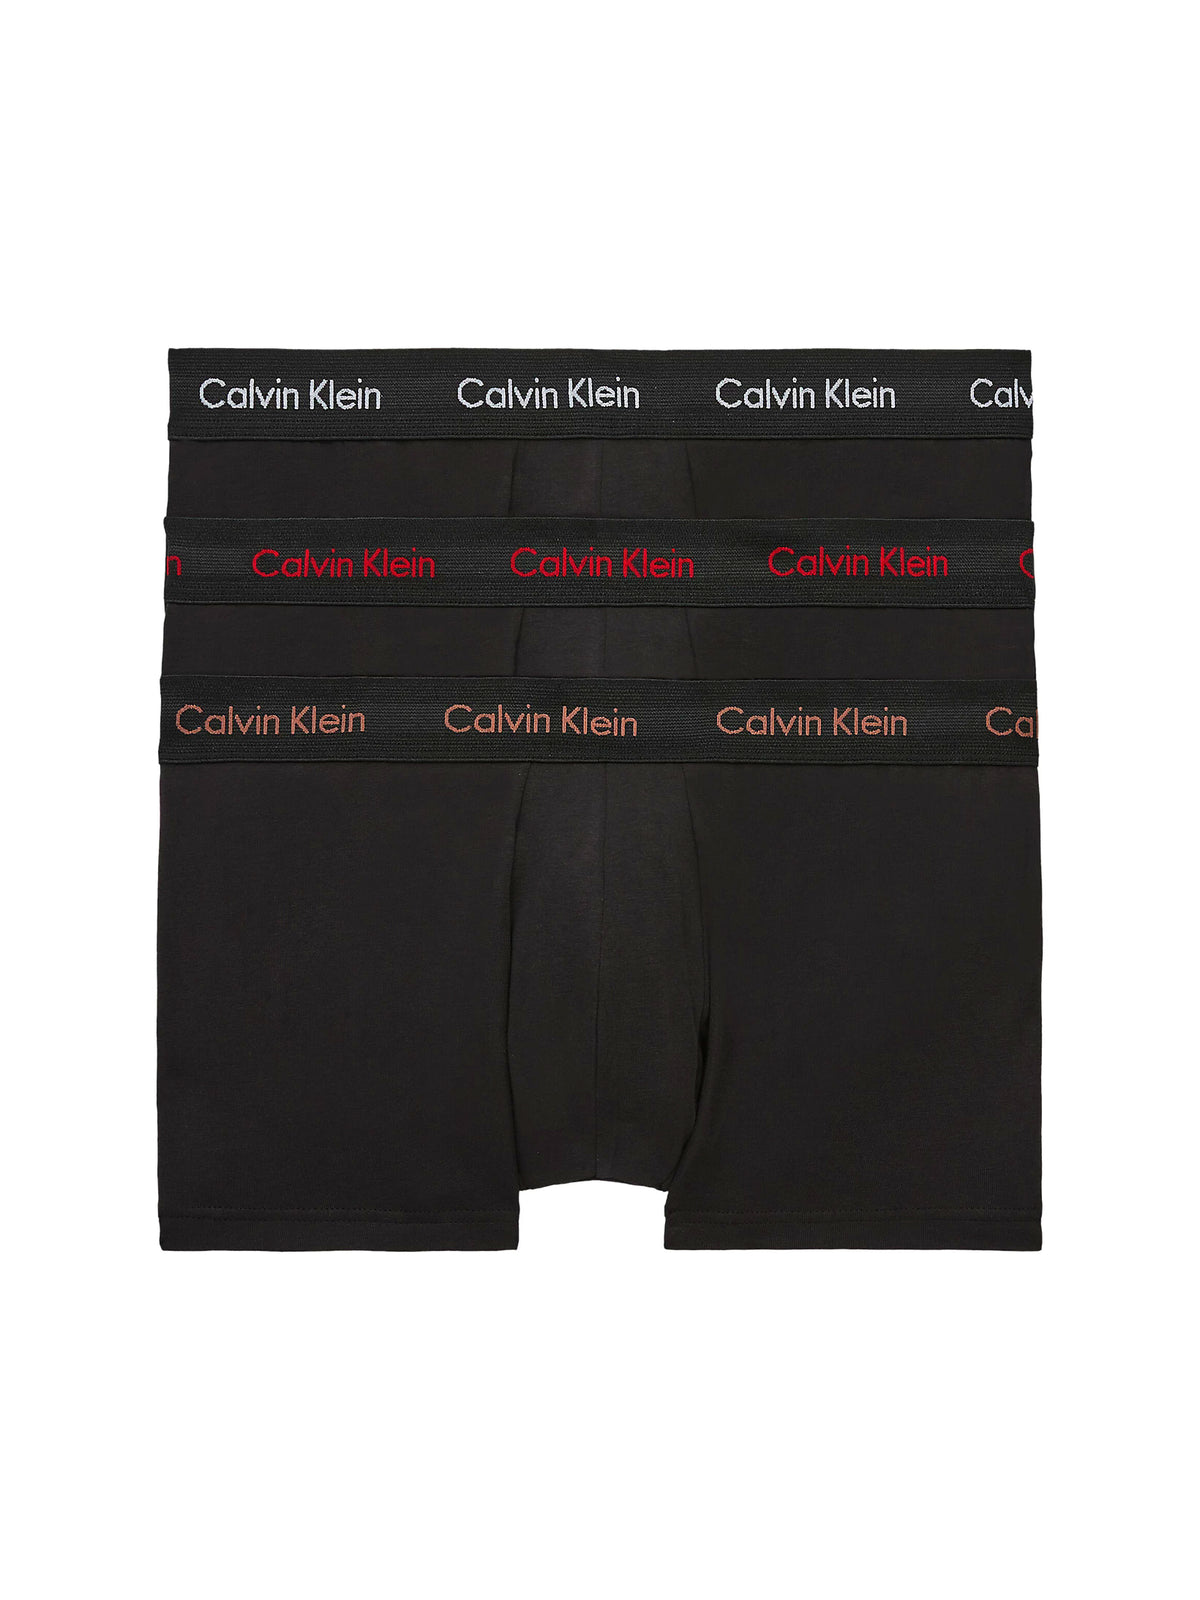 Mens Calvin Klein Boxer Shorts Low Rise Trunks 3 Pack, 01, U2664G, B-Bright Camel/ Wht/ Red Crpt Logo